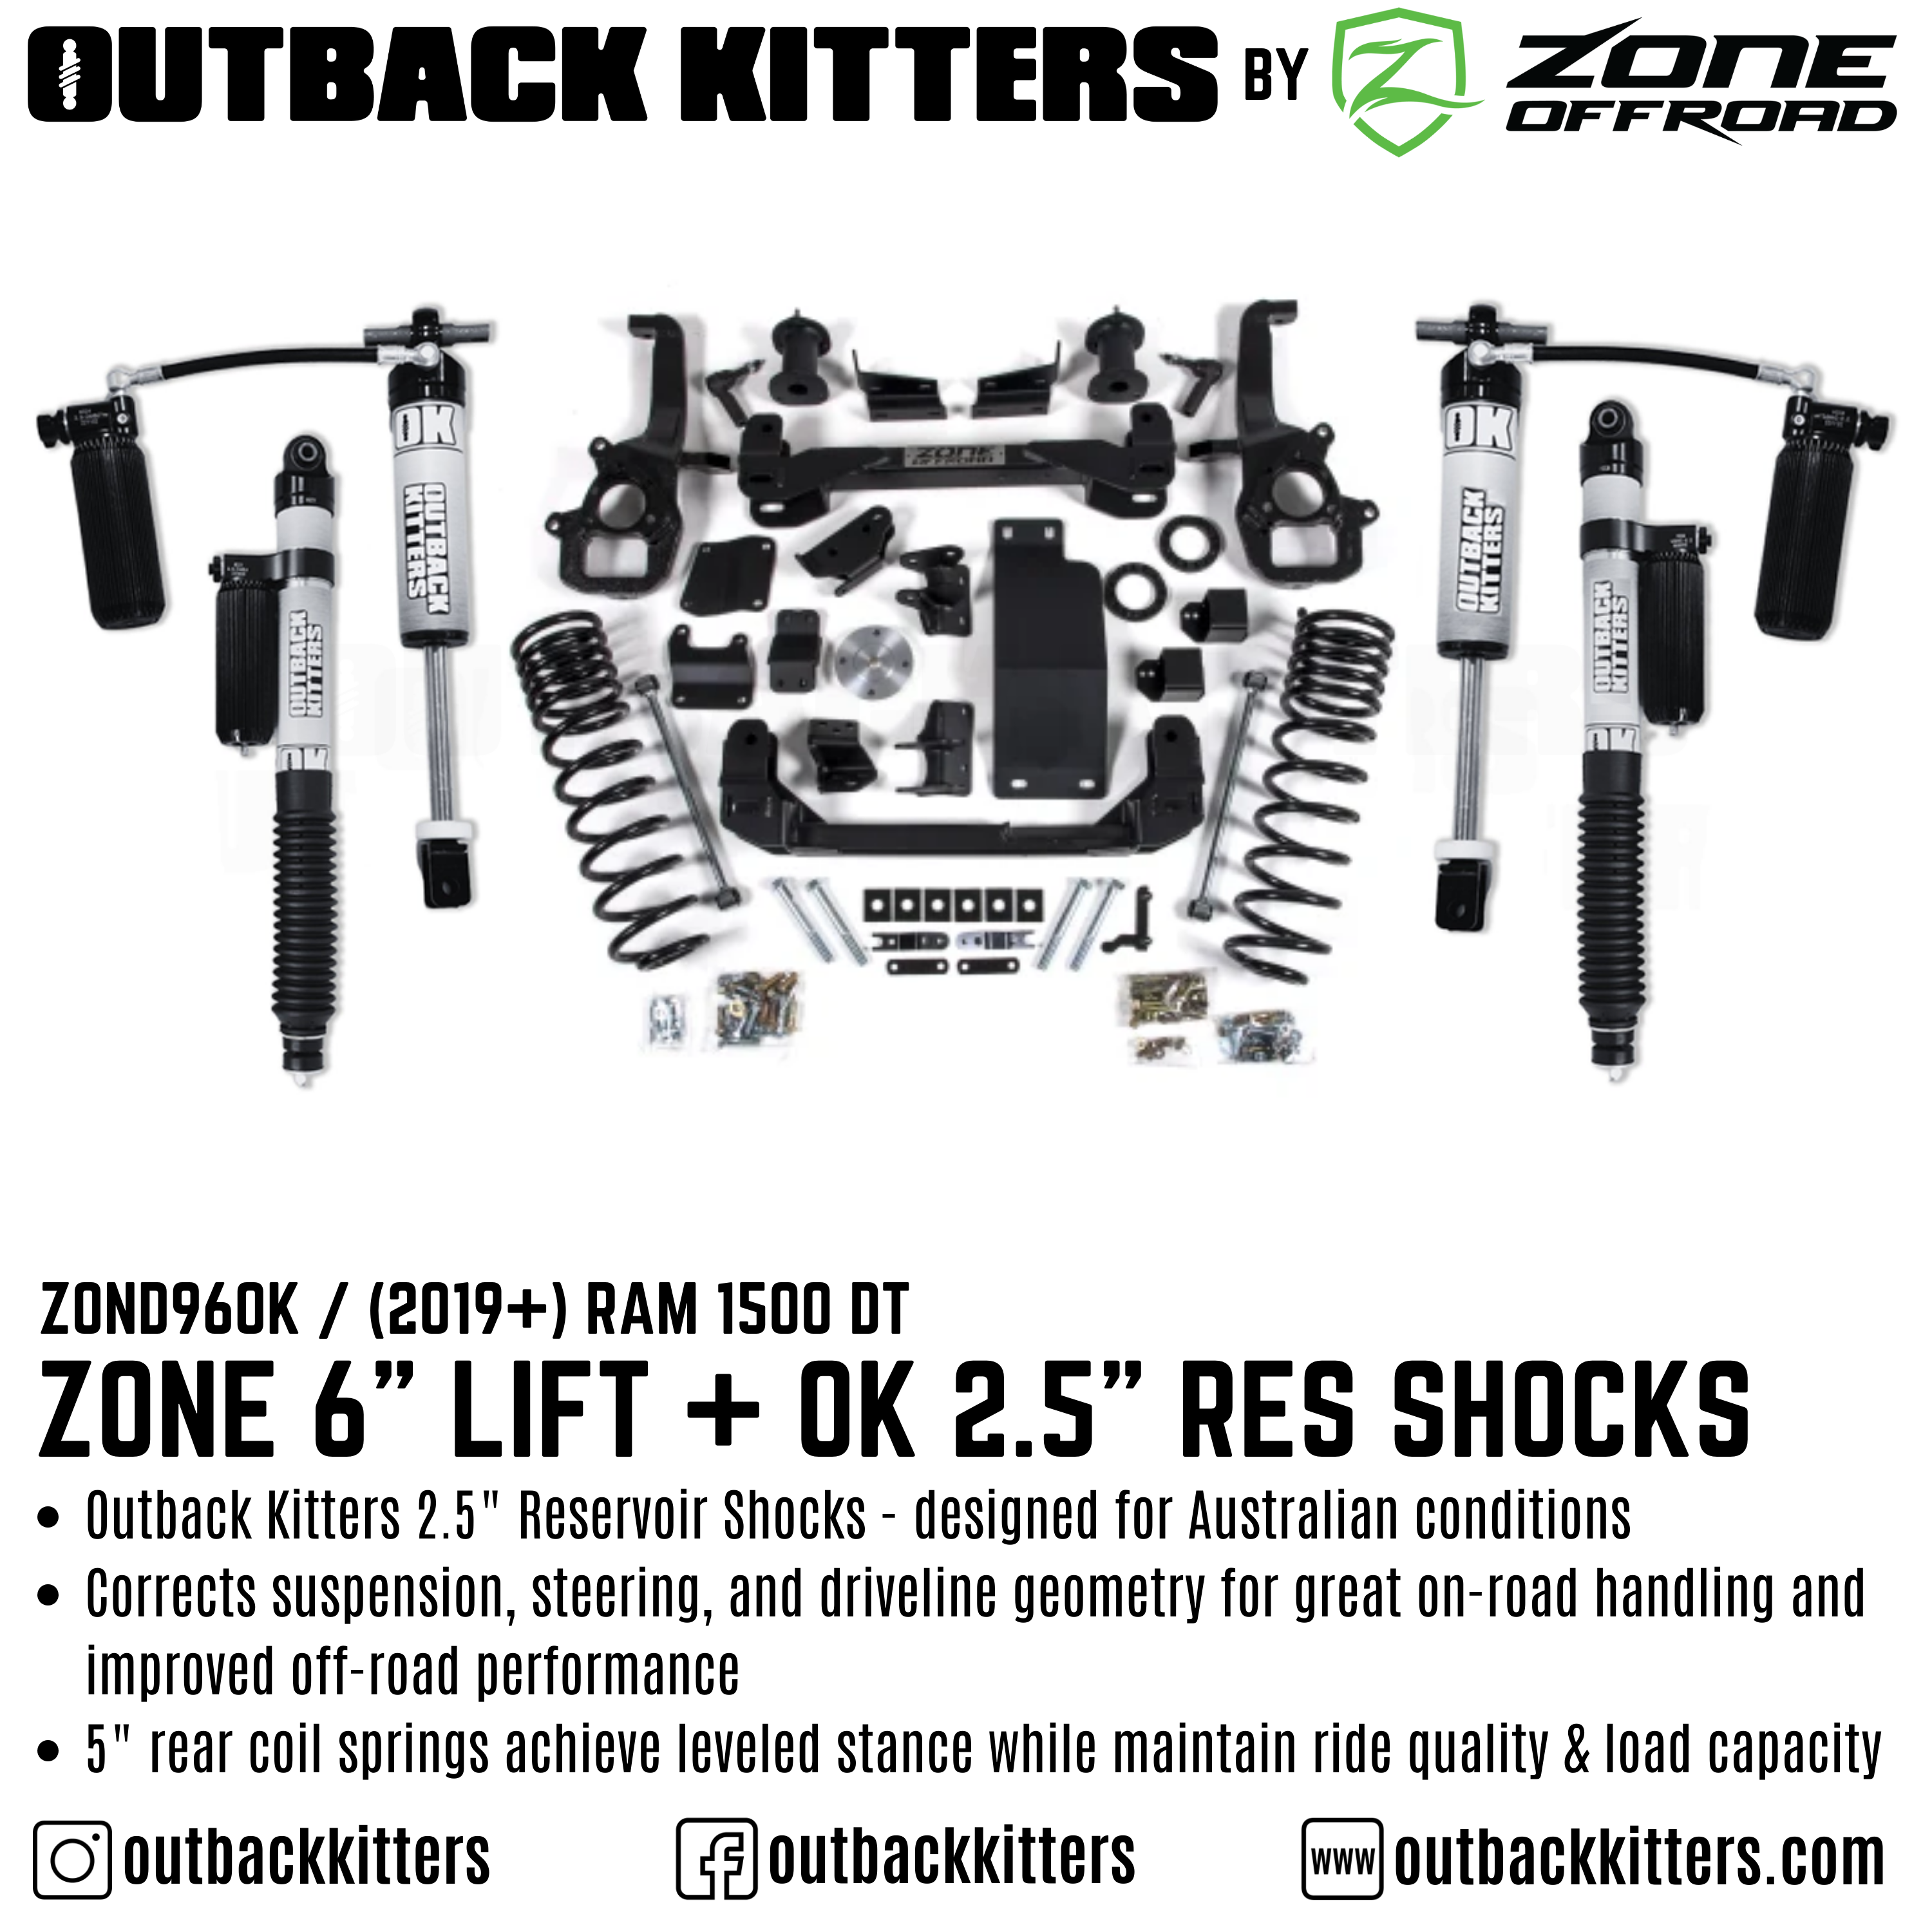 OK by Zone 6" Lift Kit + Outback Kitters 2.5" Reservoir Shocks for 2019+ Ram 1500 DT - Outback Kitters